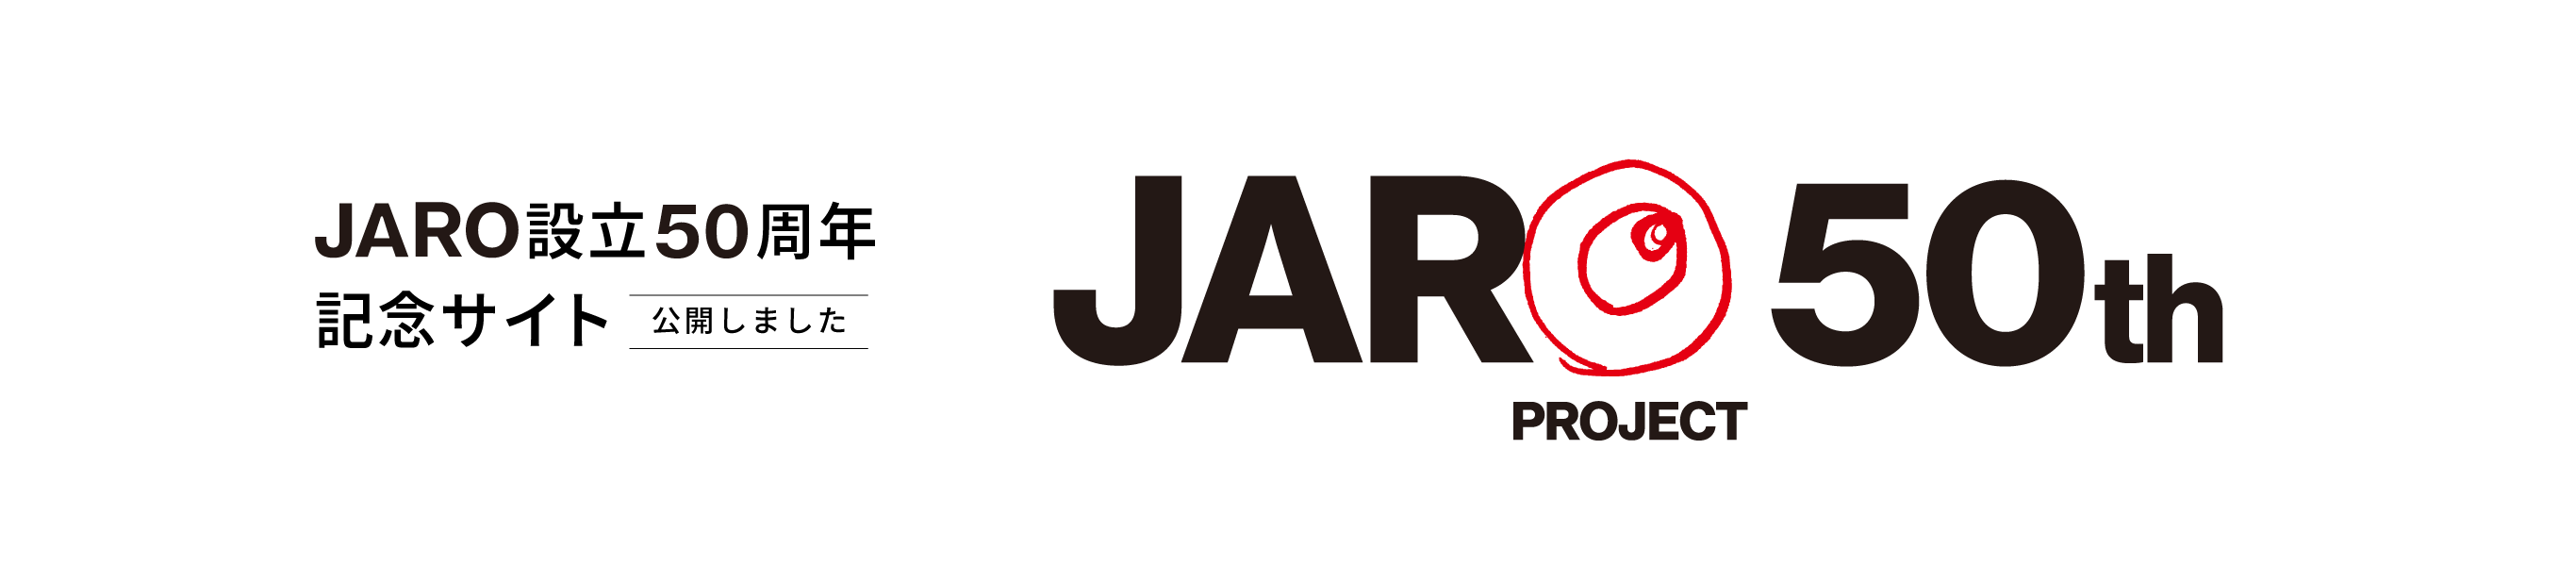 JARO 50th Project